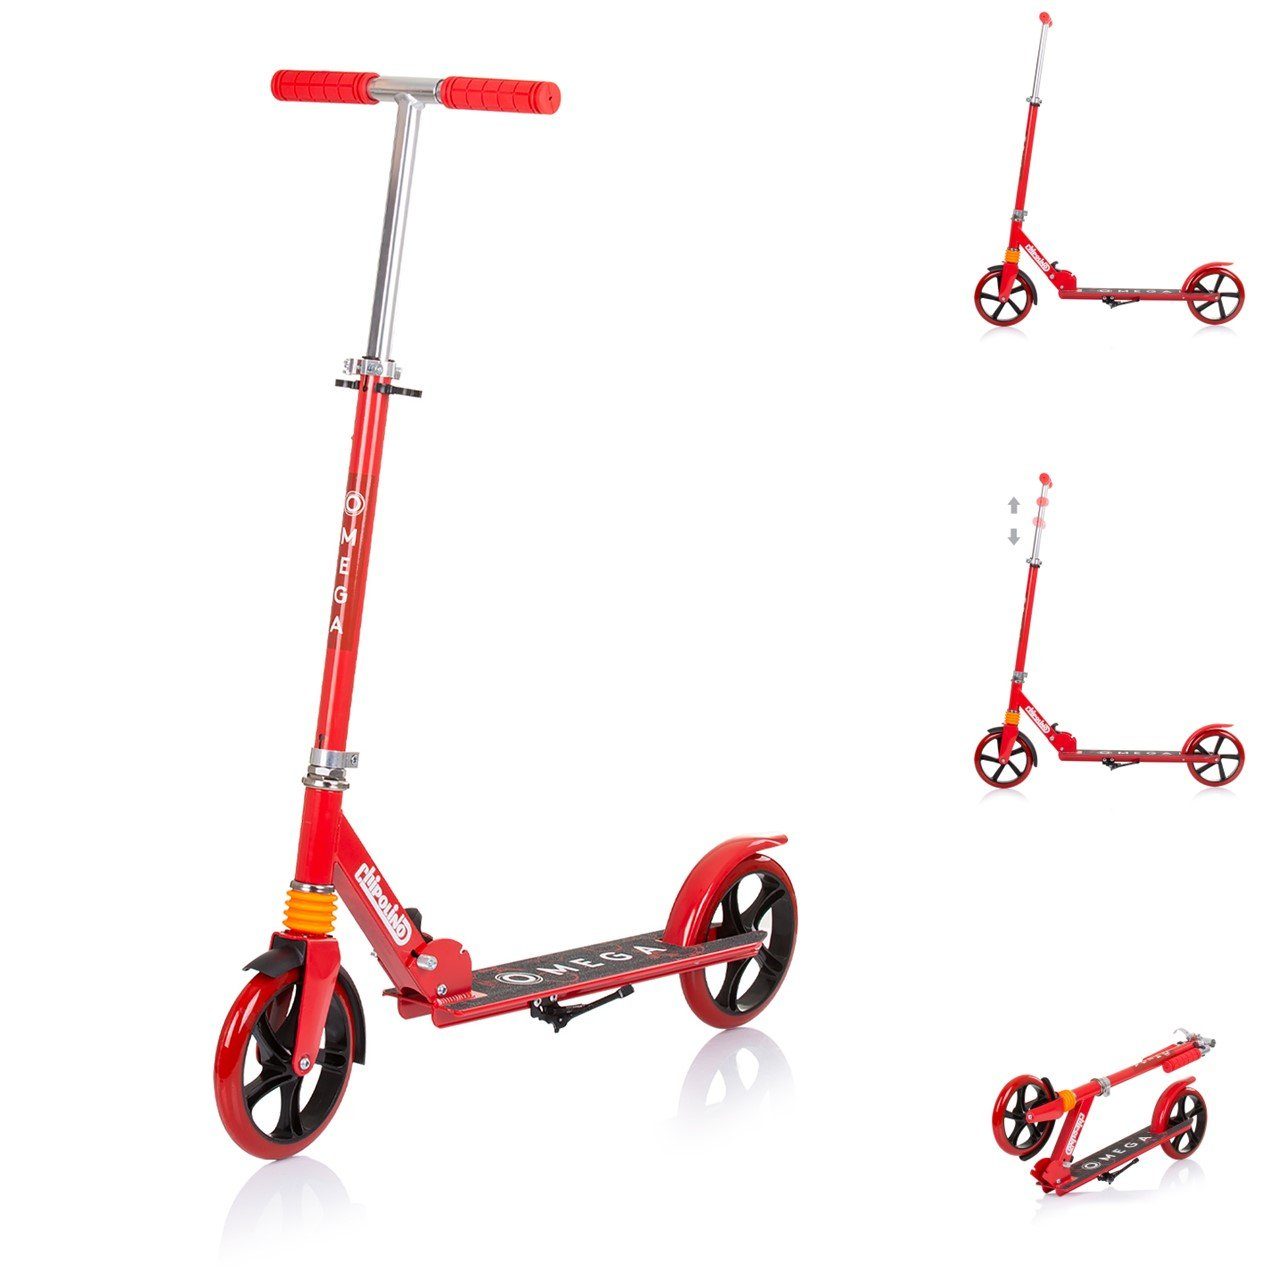 Chipolino Cityroller Kinderroller Omega PU Räder, ABEC-7 Lager verstellbar faltbar Bremse rot | Kinderroller